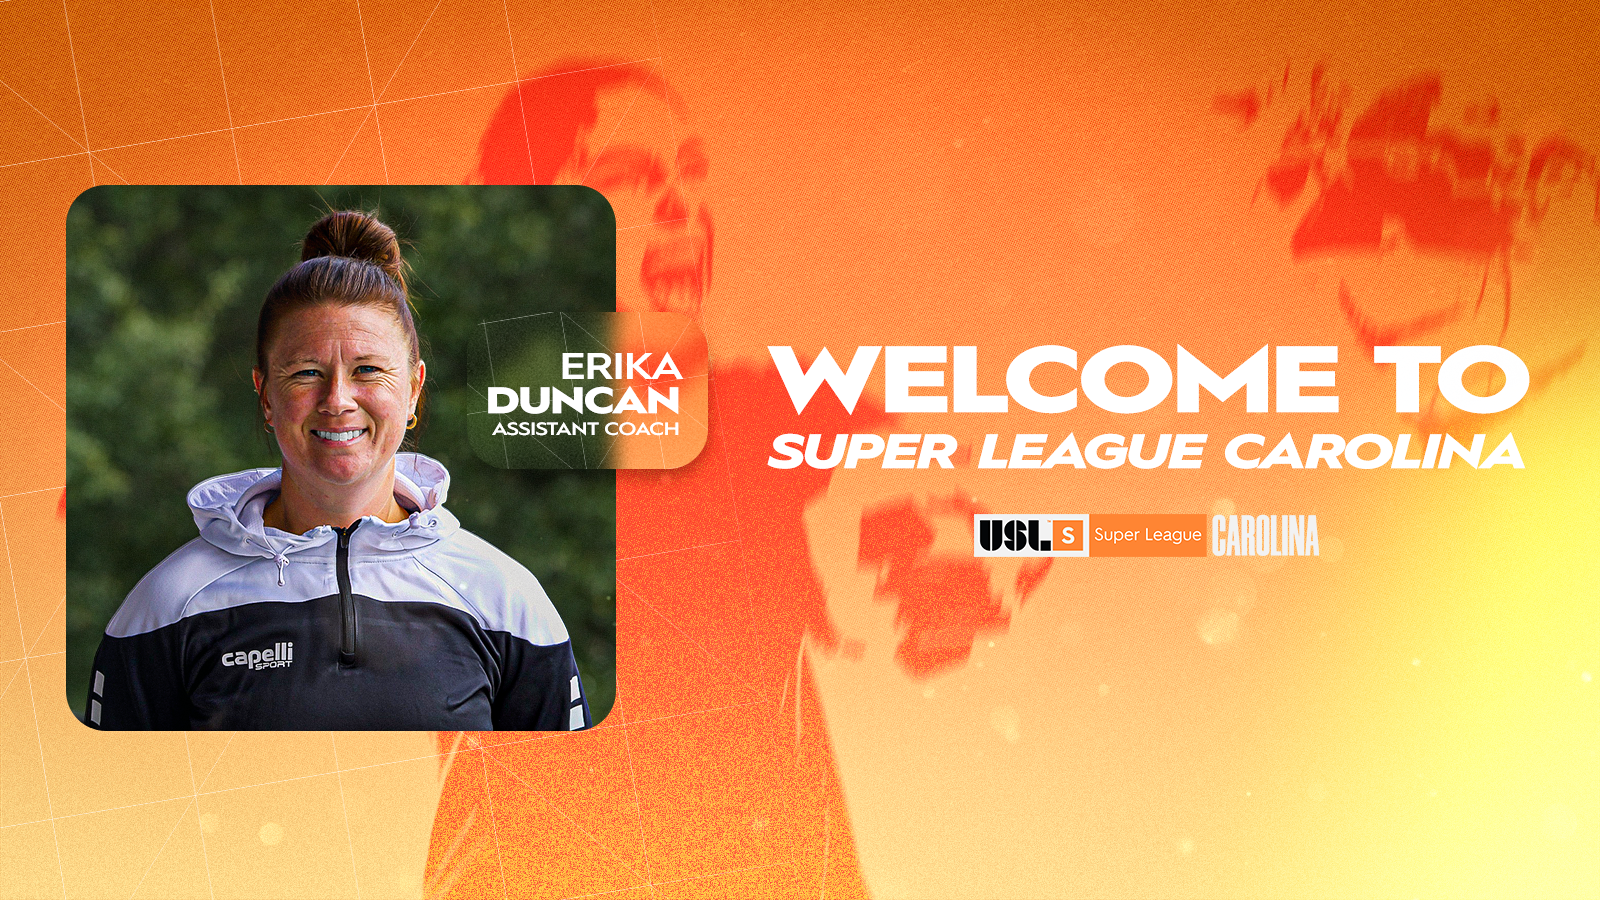 Super League Carolina Welcomes Erika Duncan as Assistant Coach featured image